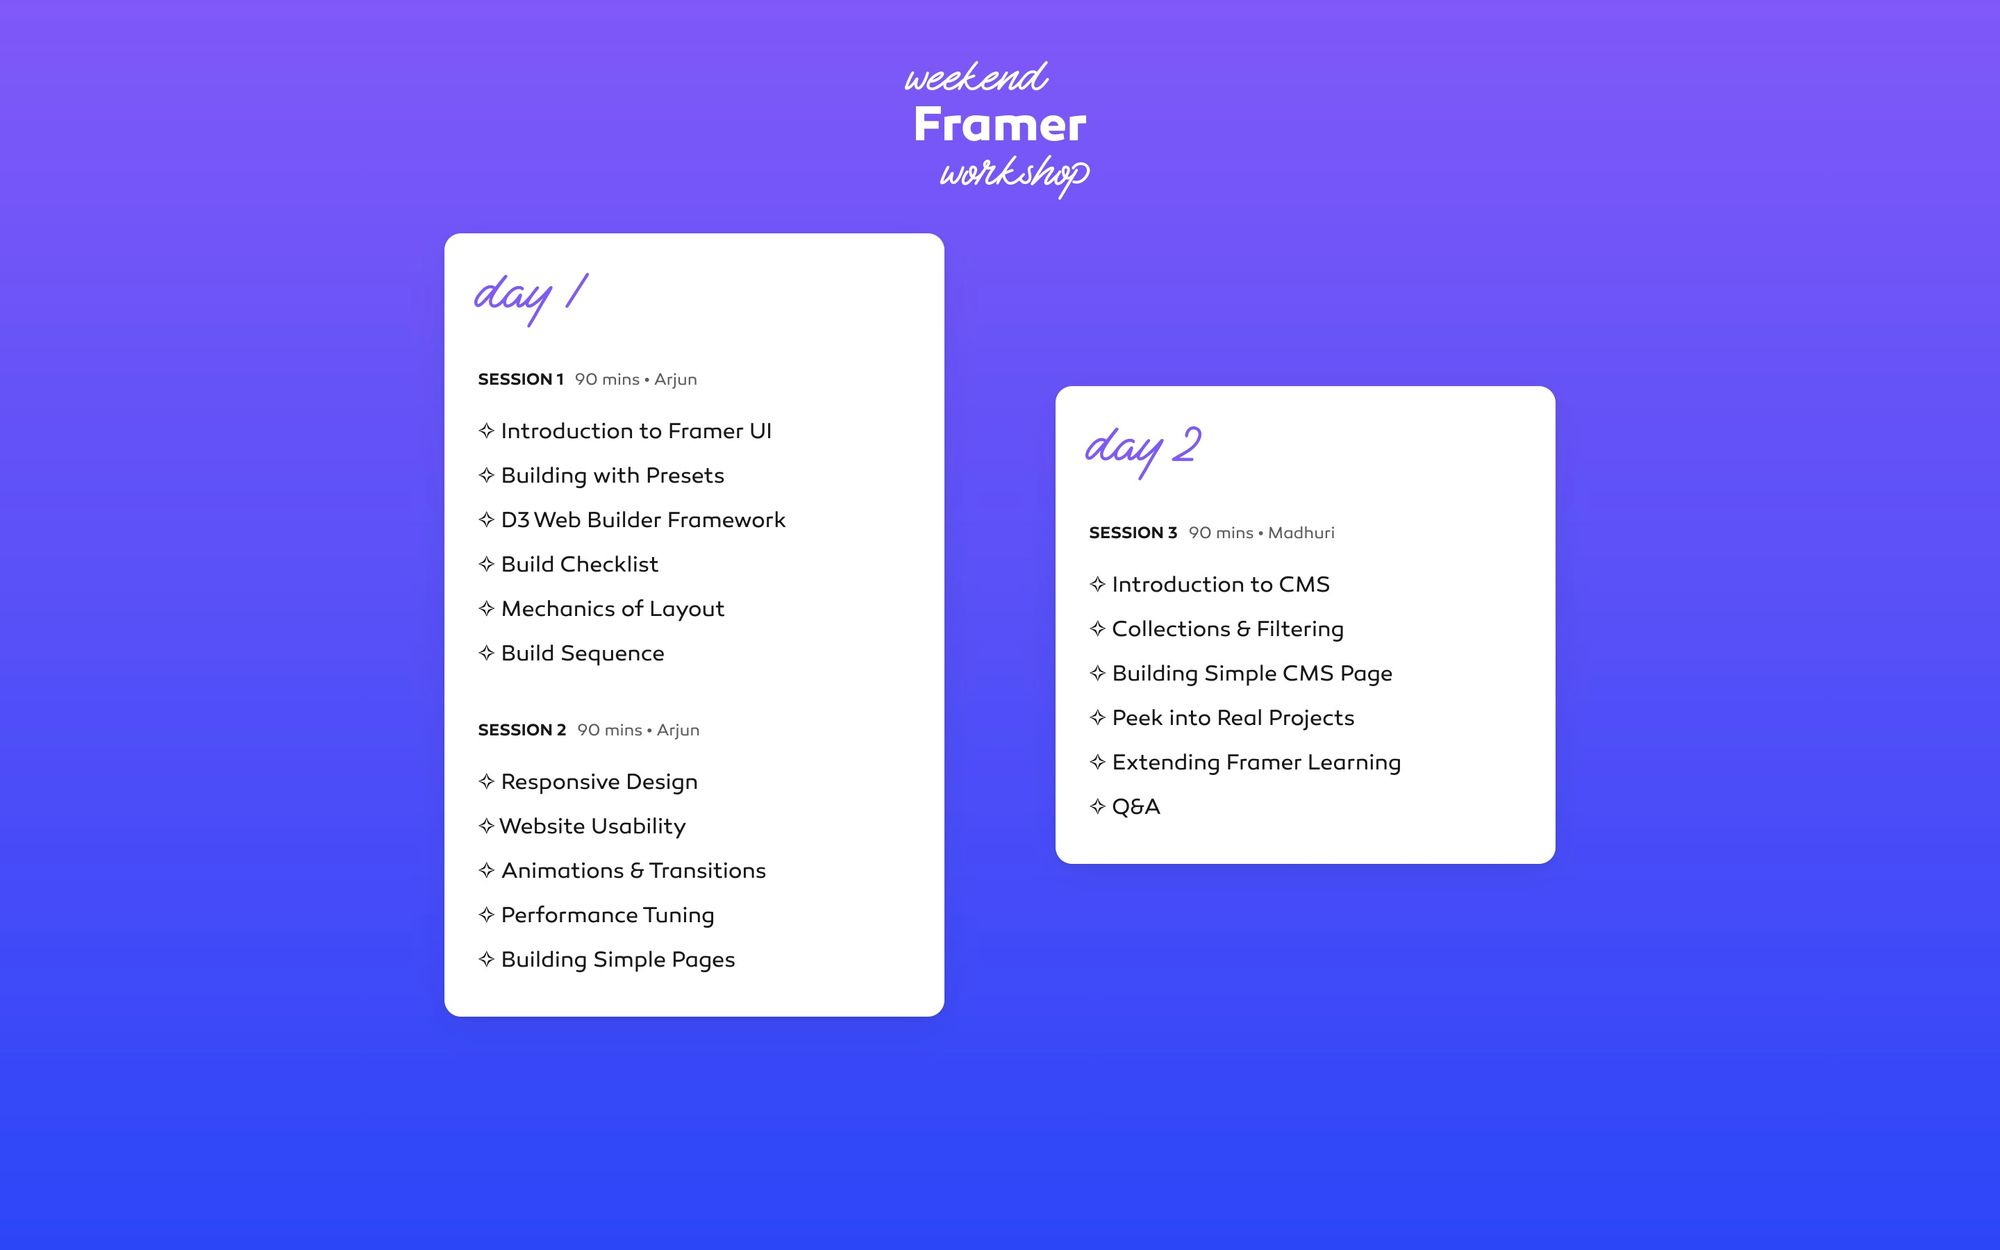 Introducing: The Weekend Framer Workshop